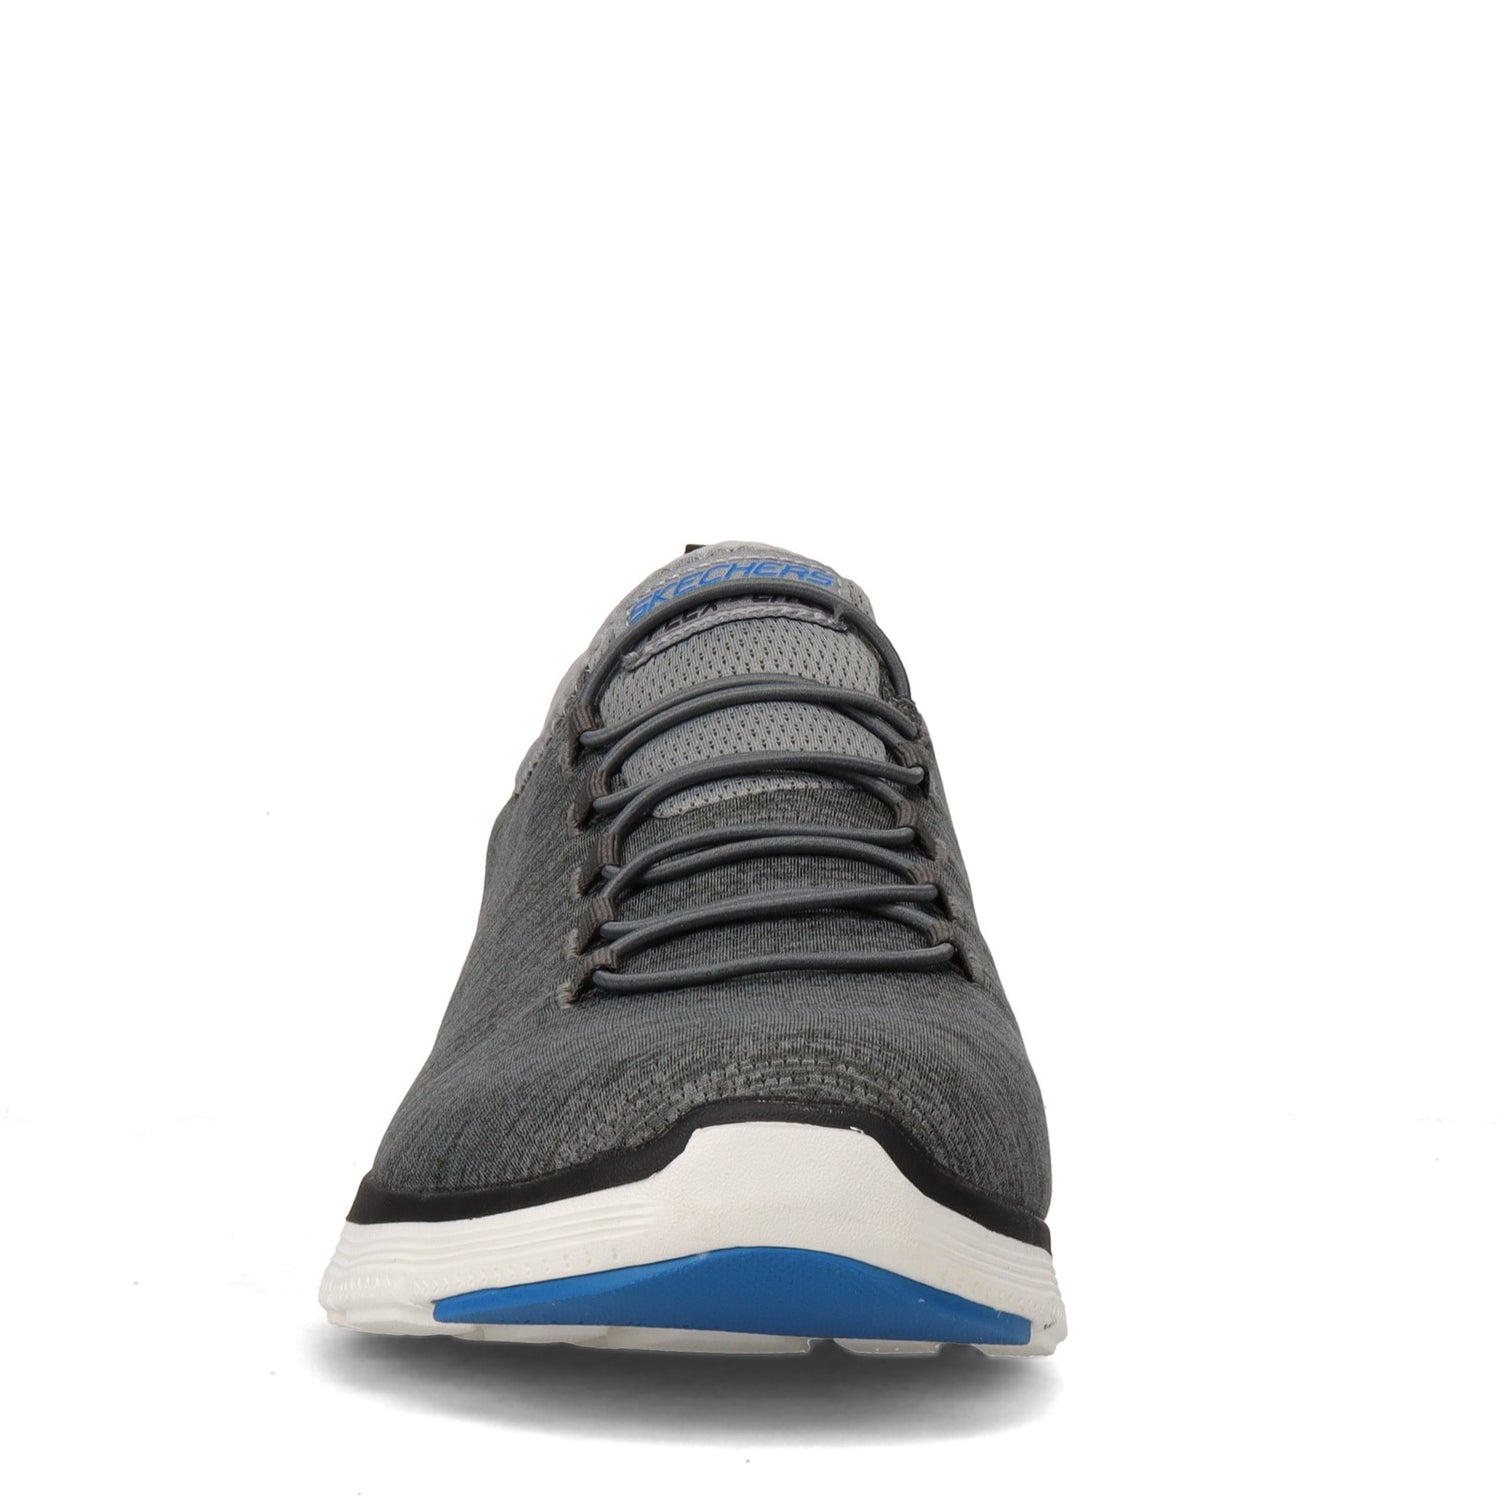 Peltz Shoes  Men's Skechers Flex Advantage 4.0 - Contributor Walking Shoe GREY BLACK 232226-GYBK